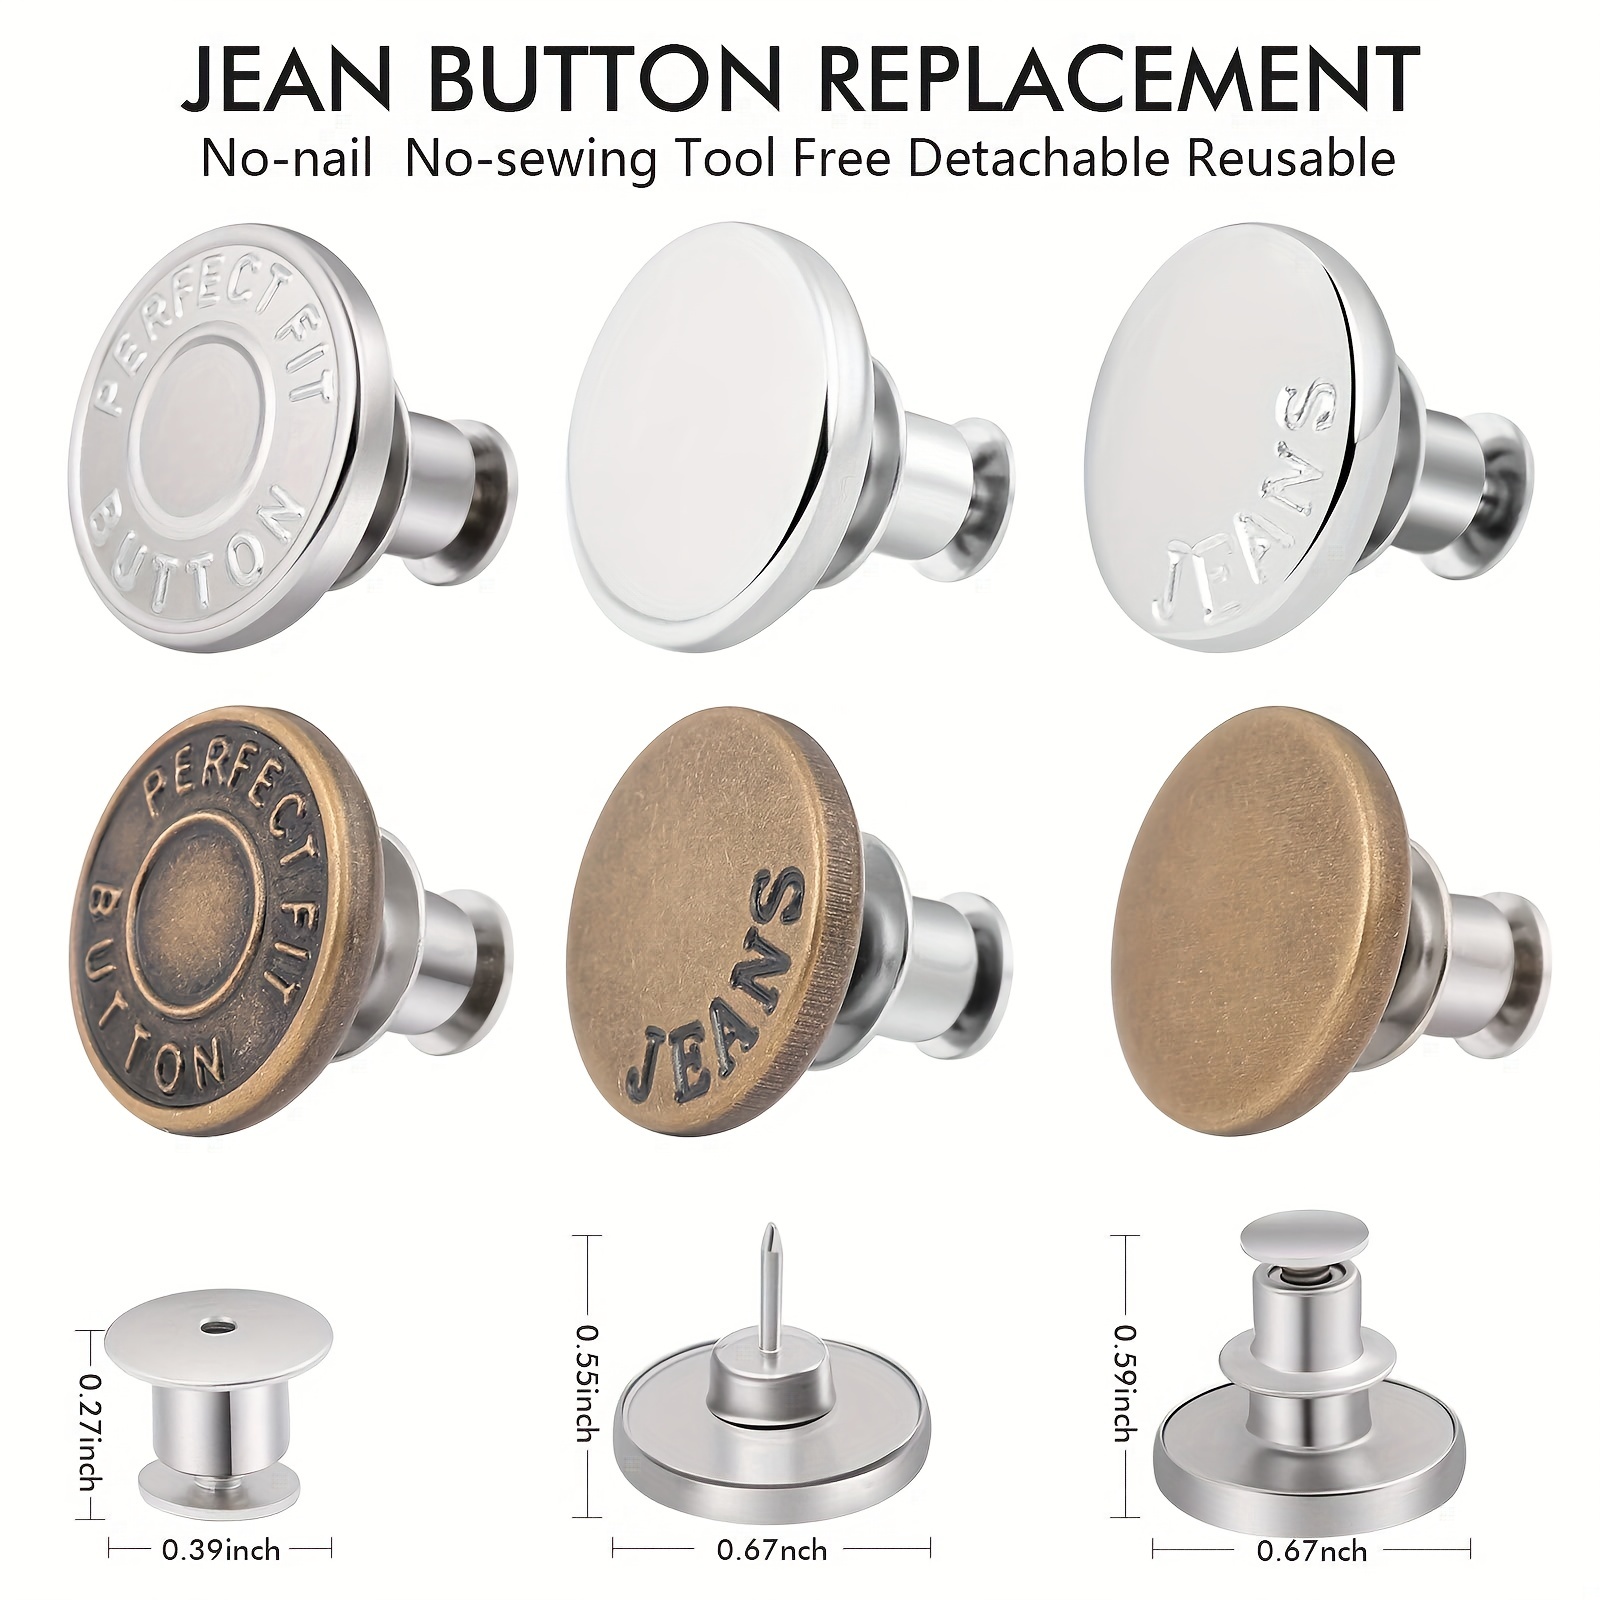  12pcs Detachable Buttons Detachable Pants Buttons Metal Buttons  for Jeans Replacement Buttons for Jeans Rivet Buttons for Jeans Jean  Buttons Jeans Accessories Nail Free Alloy